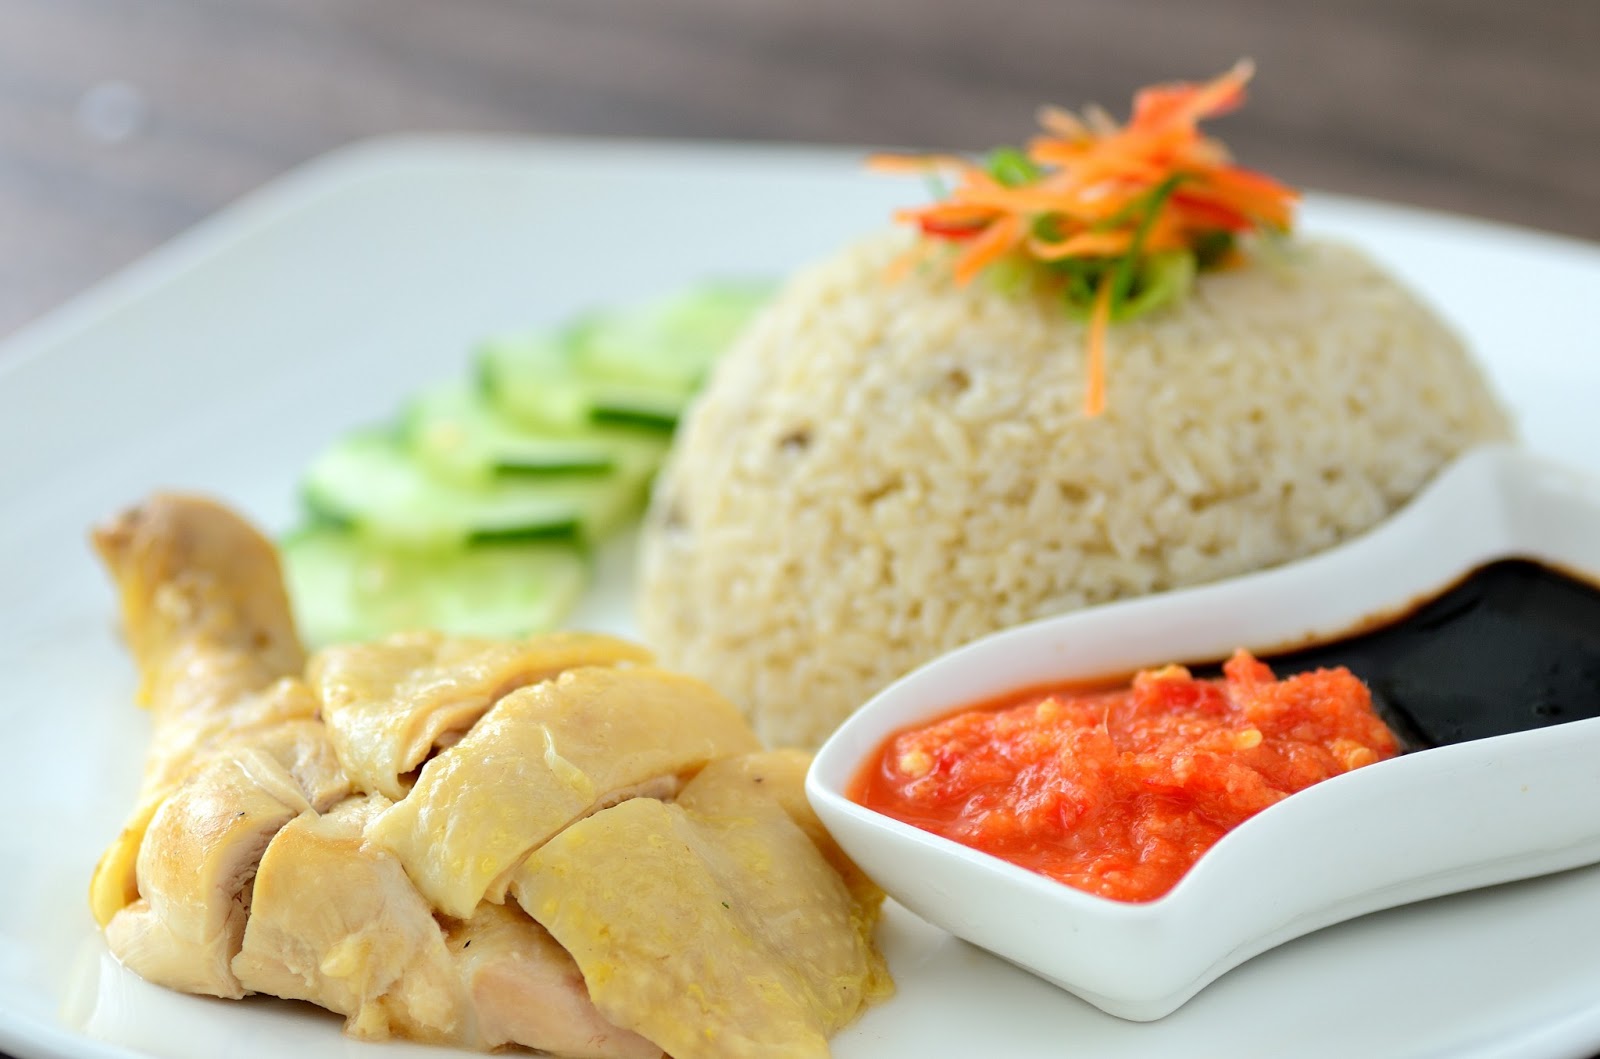 Курица без риса. Чикен Райс. Hainanese Chicken. Рис с курицей по-хайнаньски. Сингапурский рис с курицей.